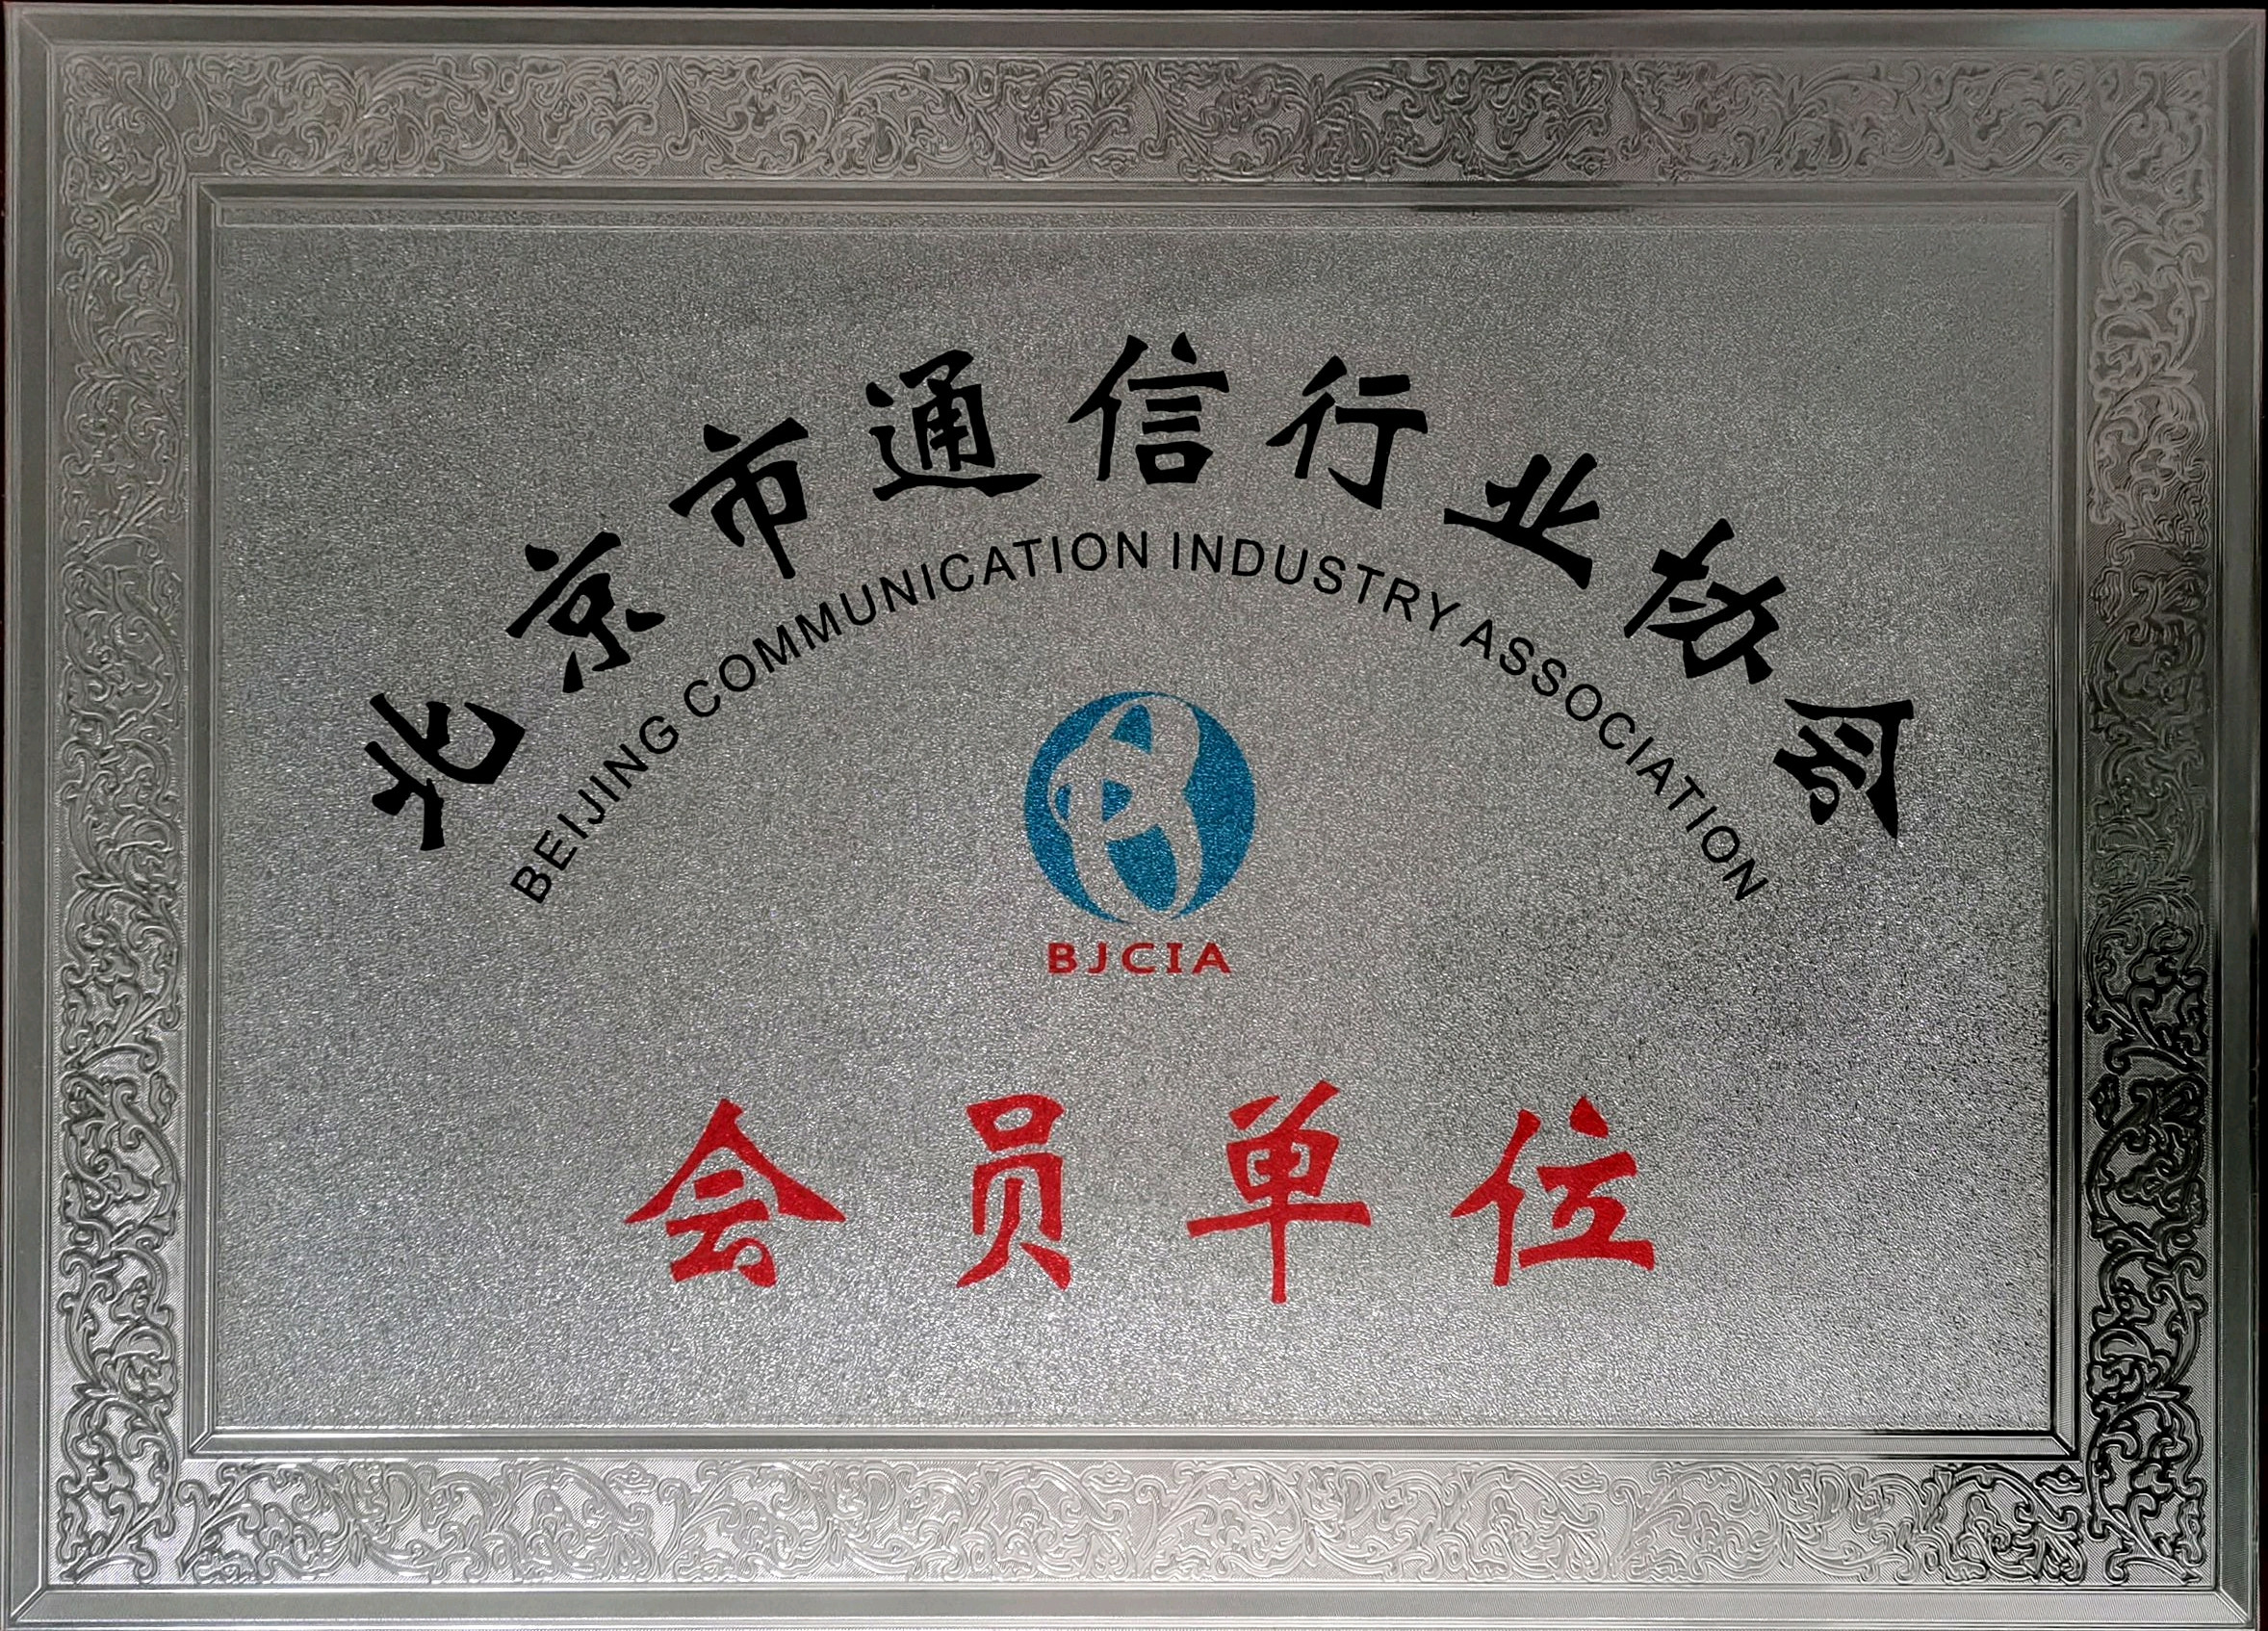                             Member of Beijing Communication Industry Association
                        